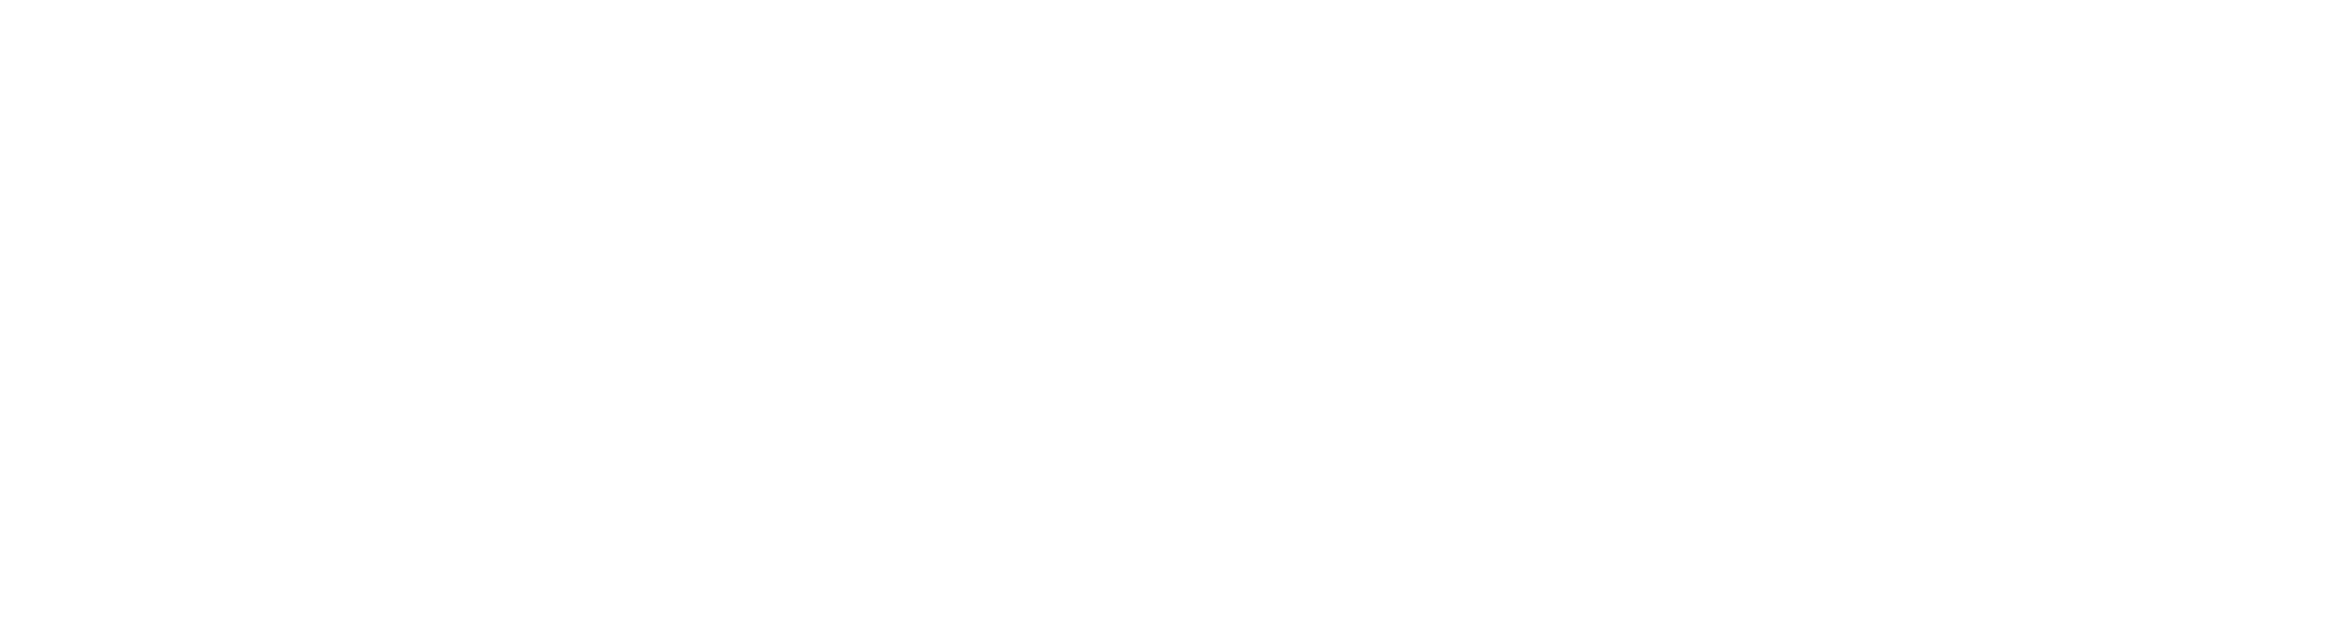 Performance Insulation & Energy Services, Inc. Logo